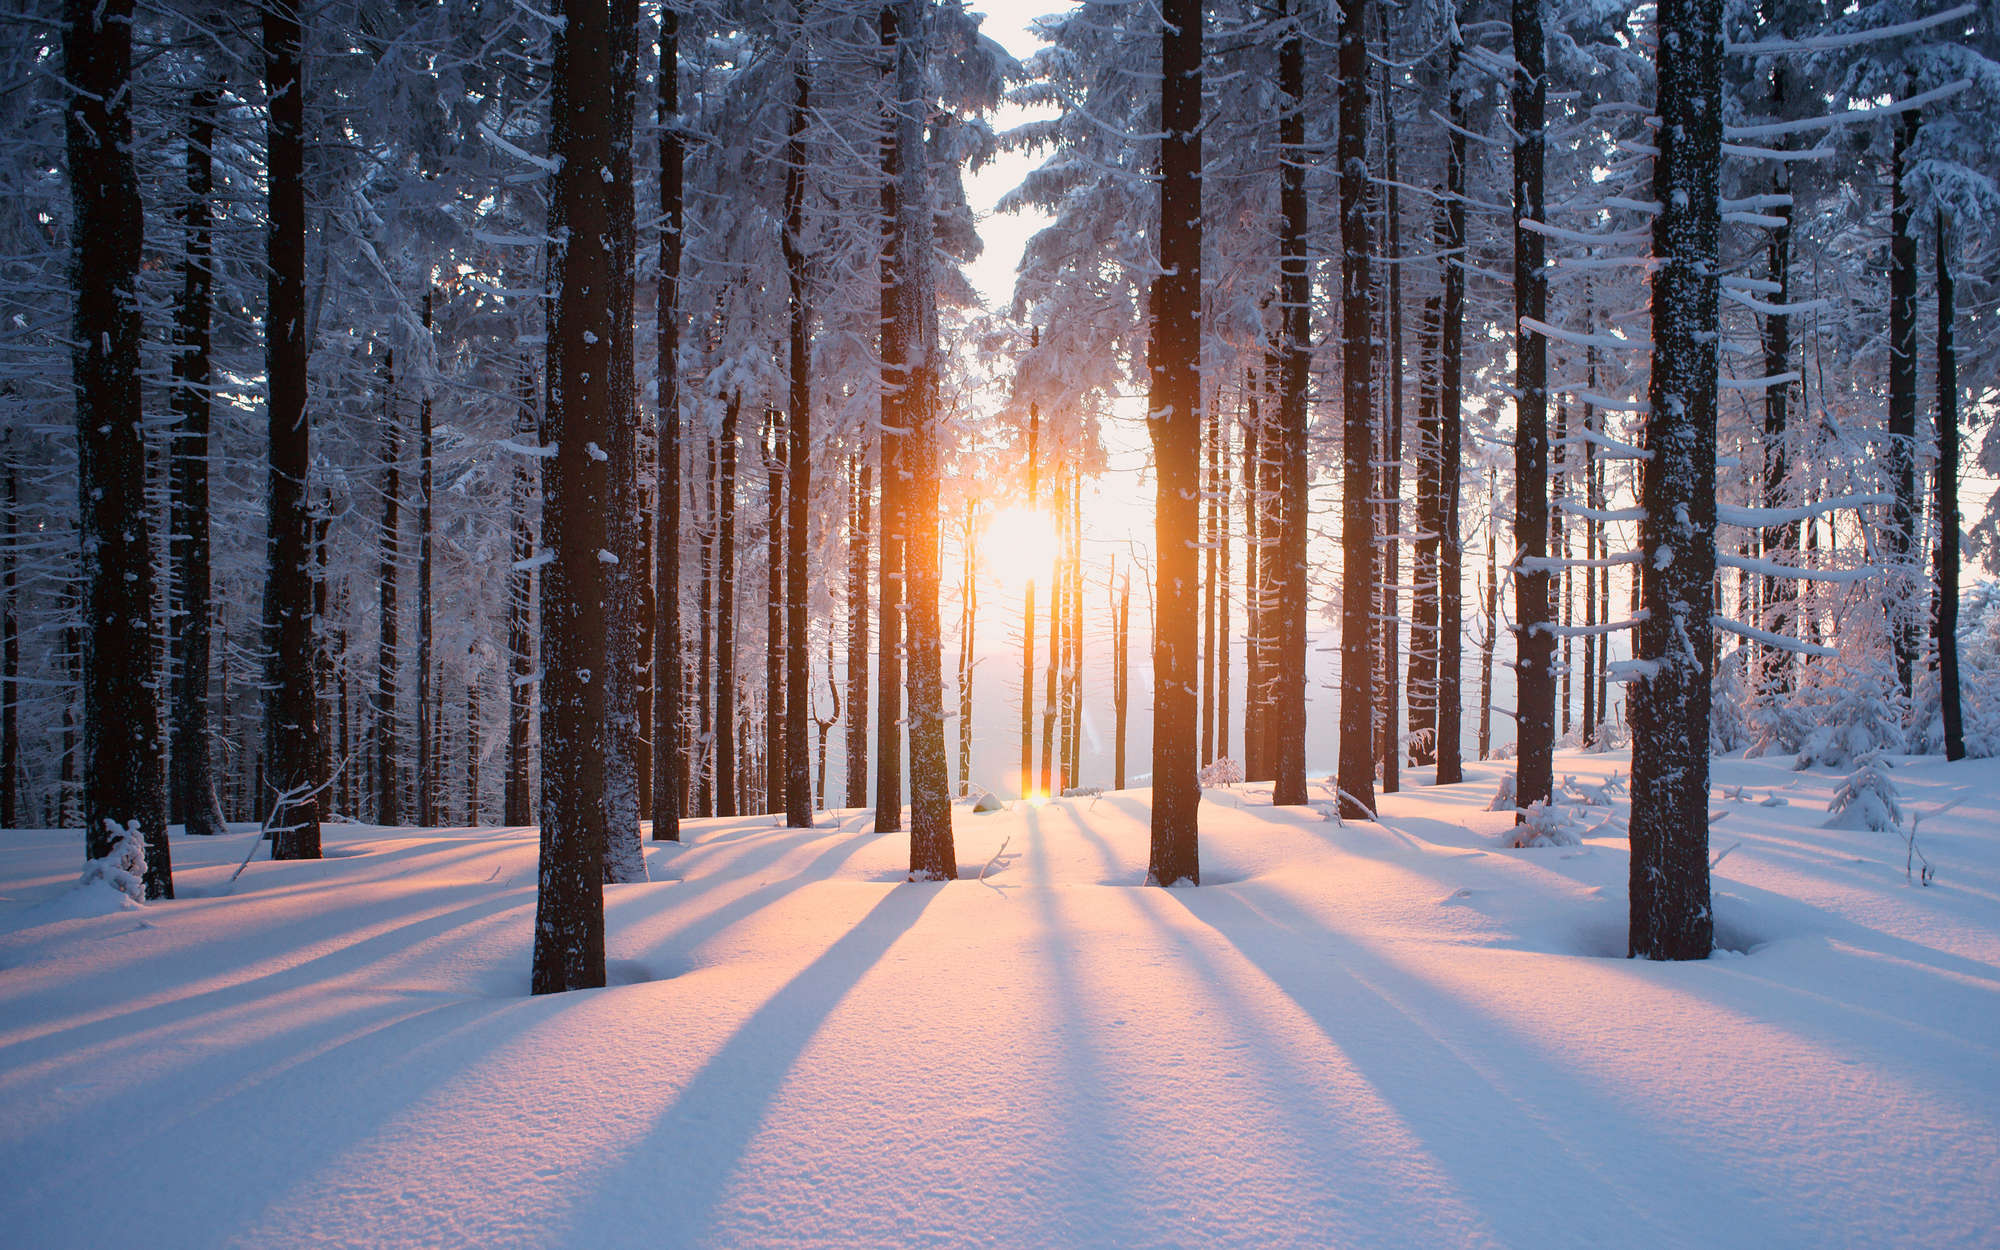             Fotomurali Neve nella foresta invernale - Pile liscio Premium
        